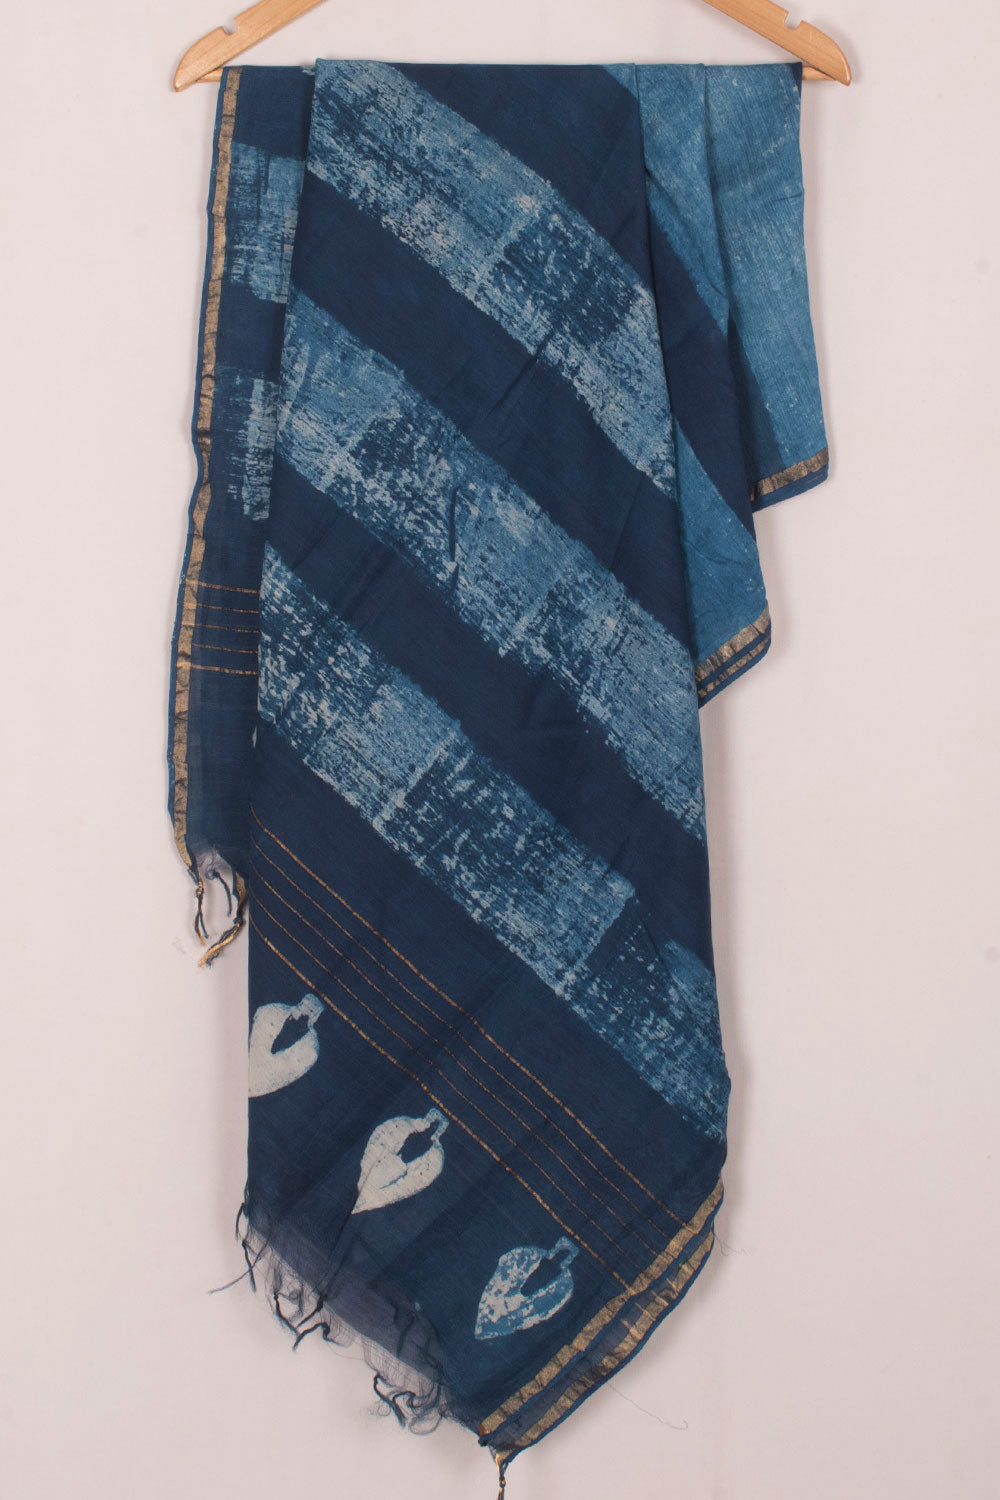 Dabu Printed Chanderi Indigo Silk Cotton Dupatta with Stripes